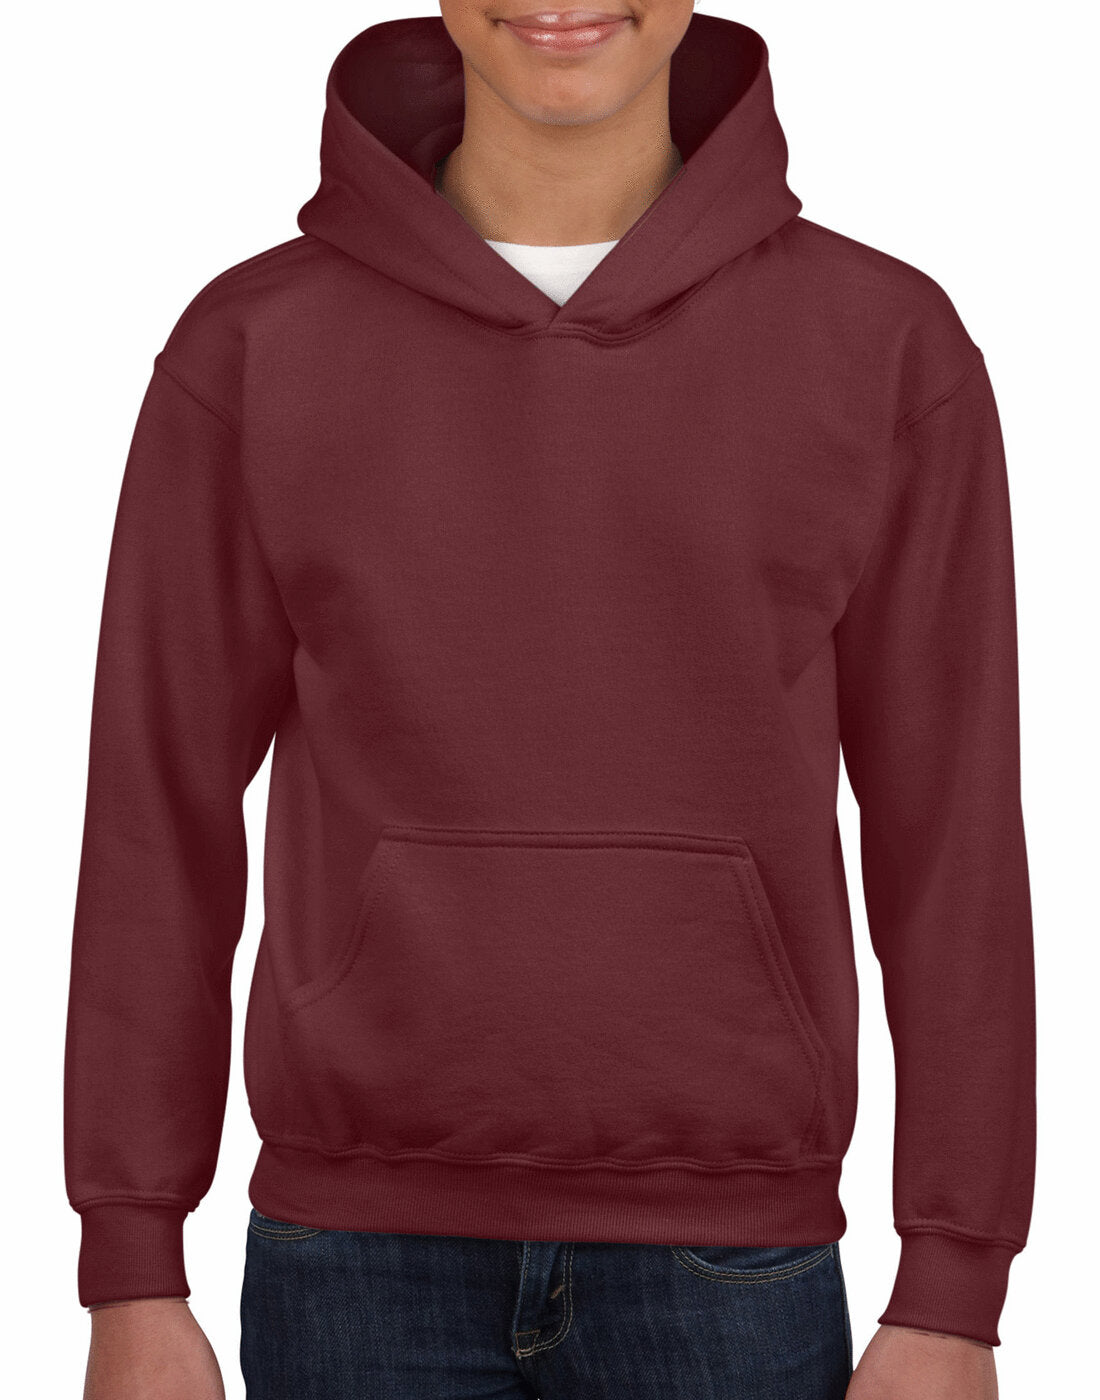 Gildan Kids Heavy Blend Hooded Sweatshirt - Maroon